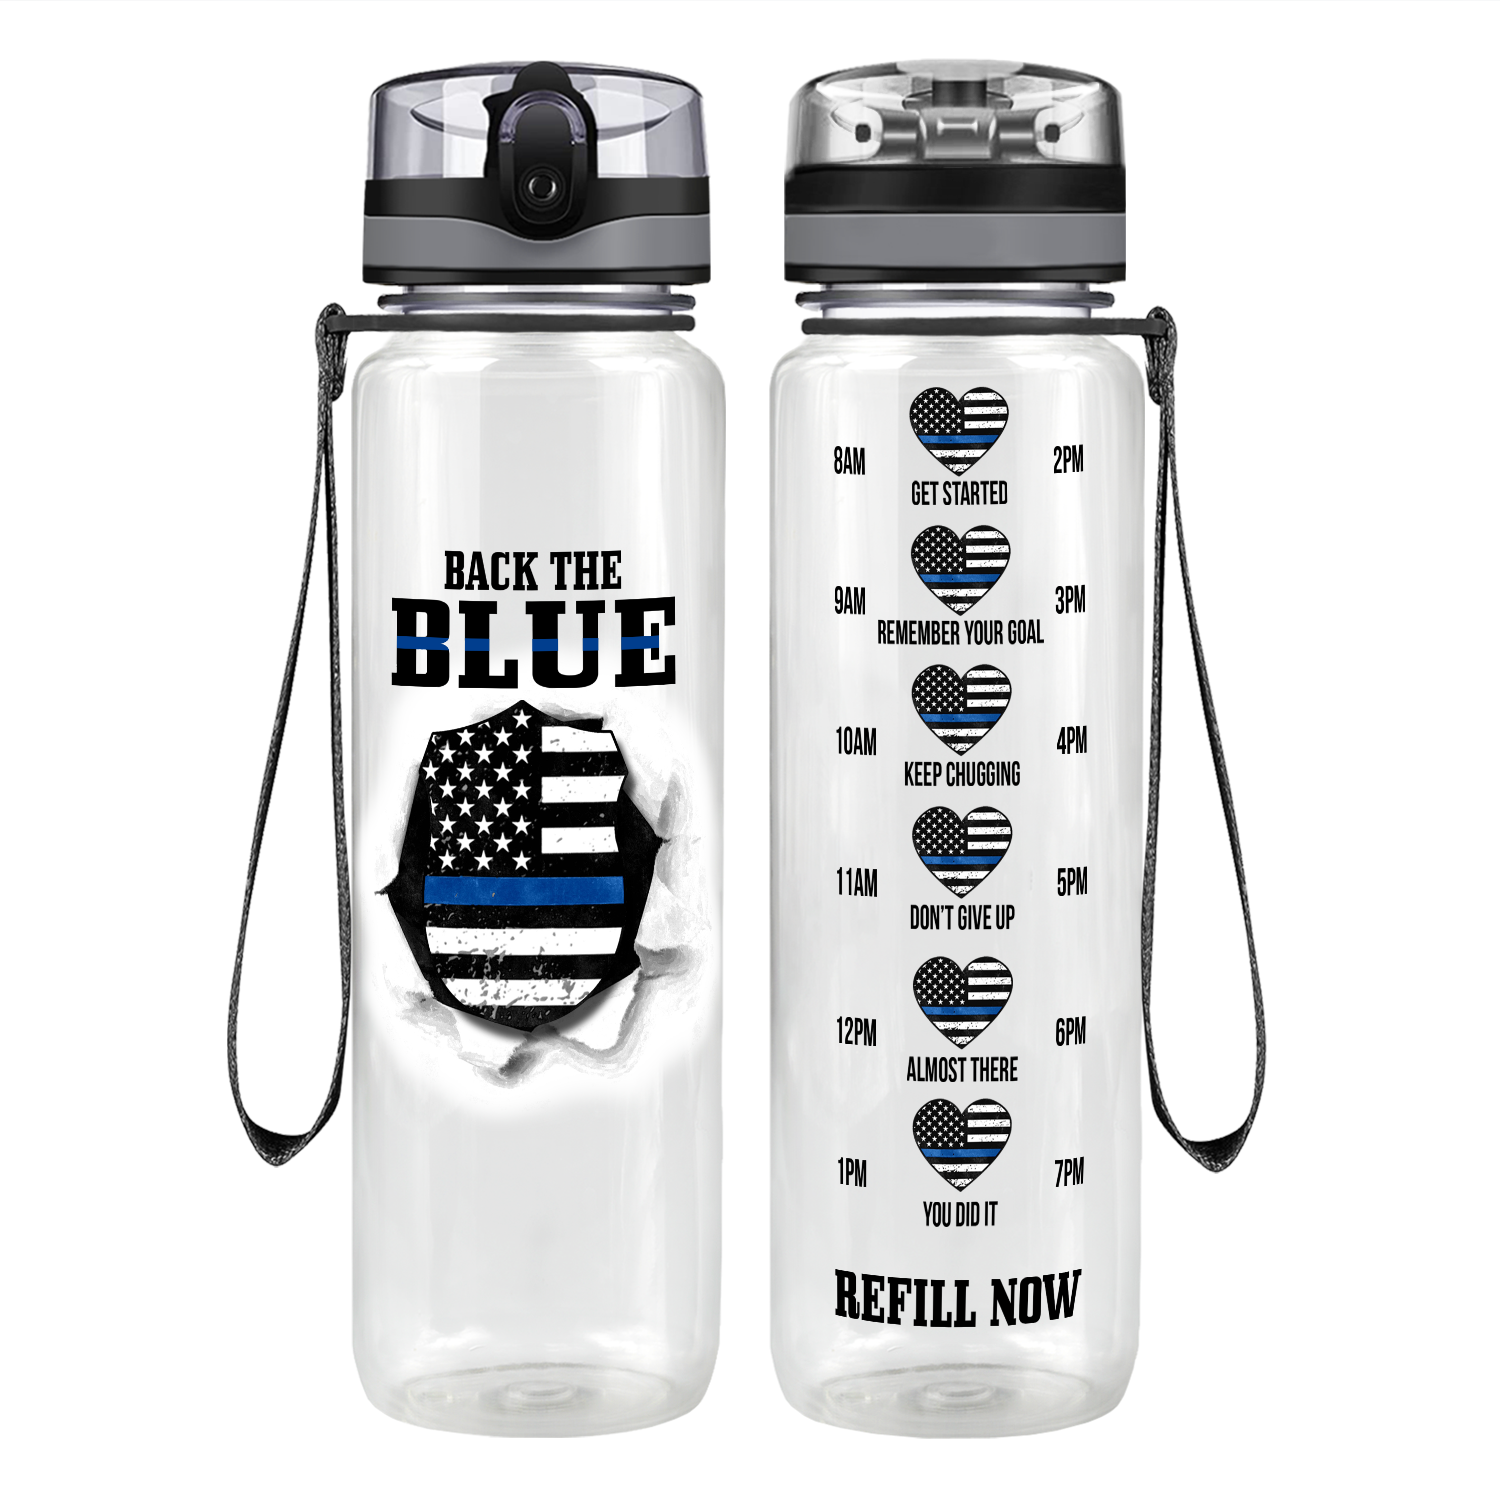 Back the Blue Motivational Tracking Water Bottle